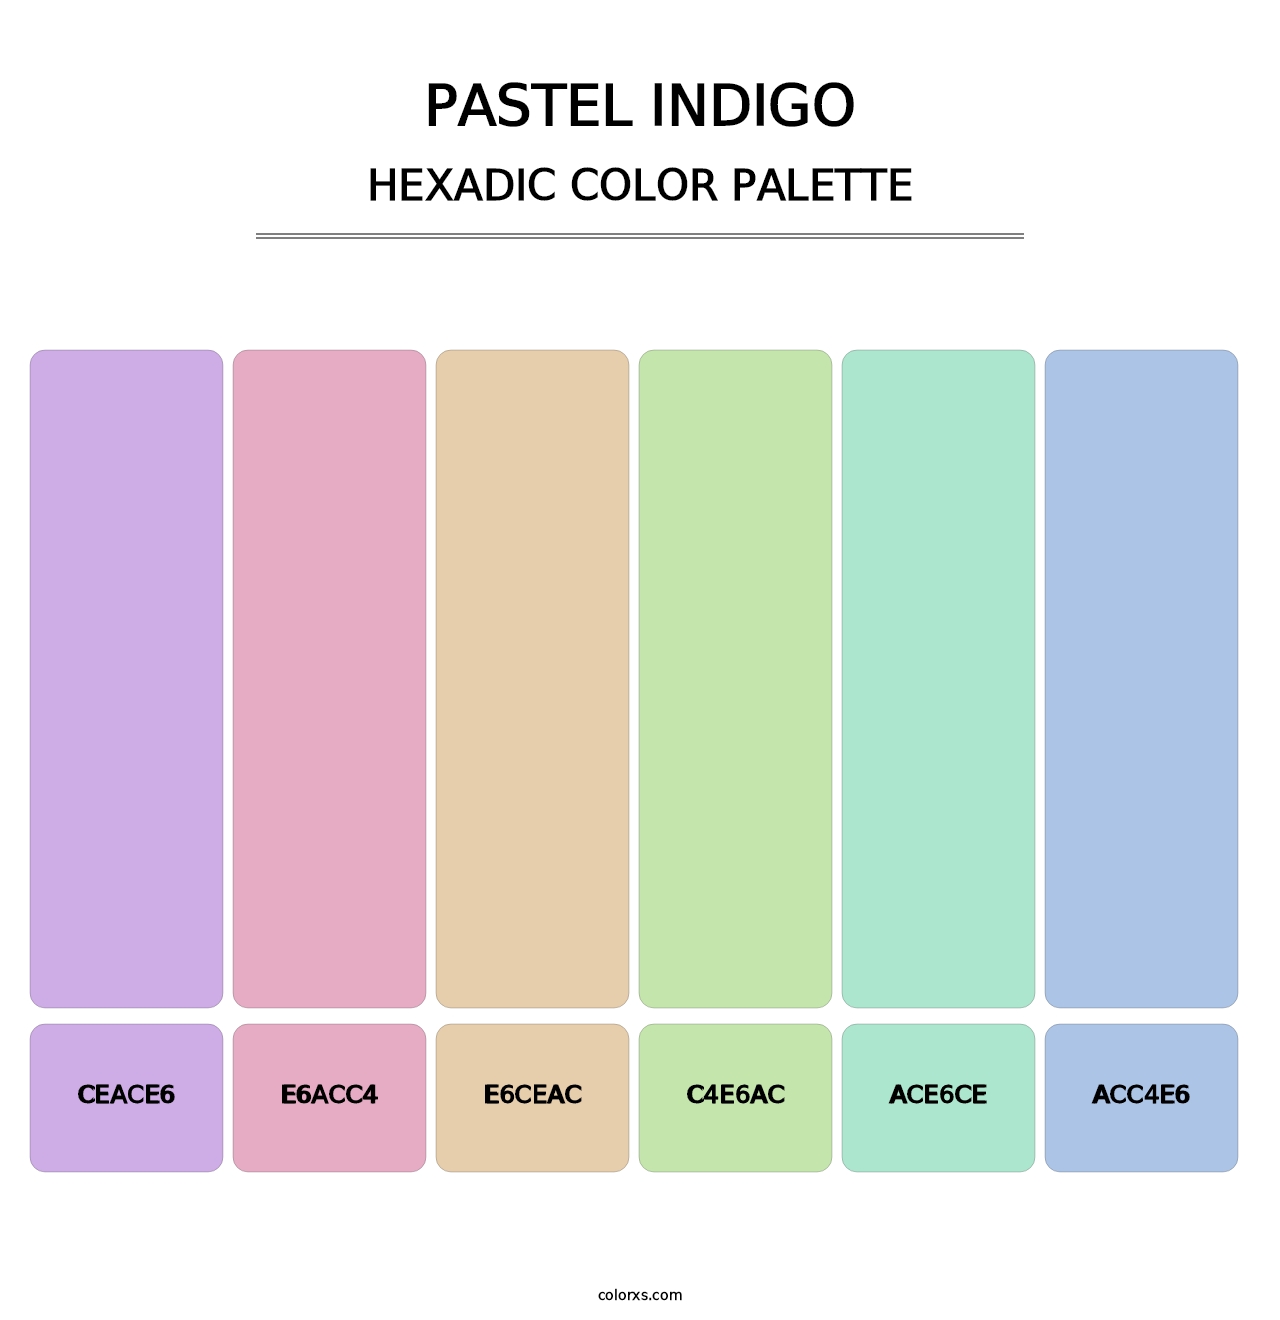 Pastel Indigo - Hexadic Color Palette